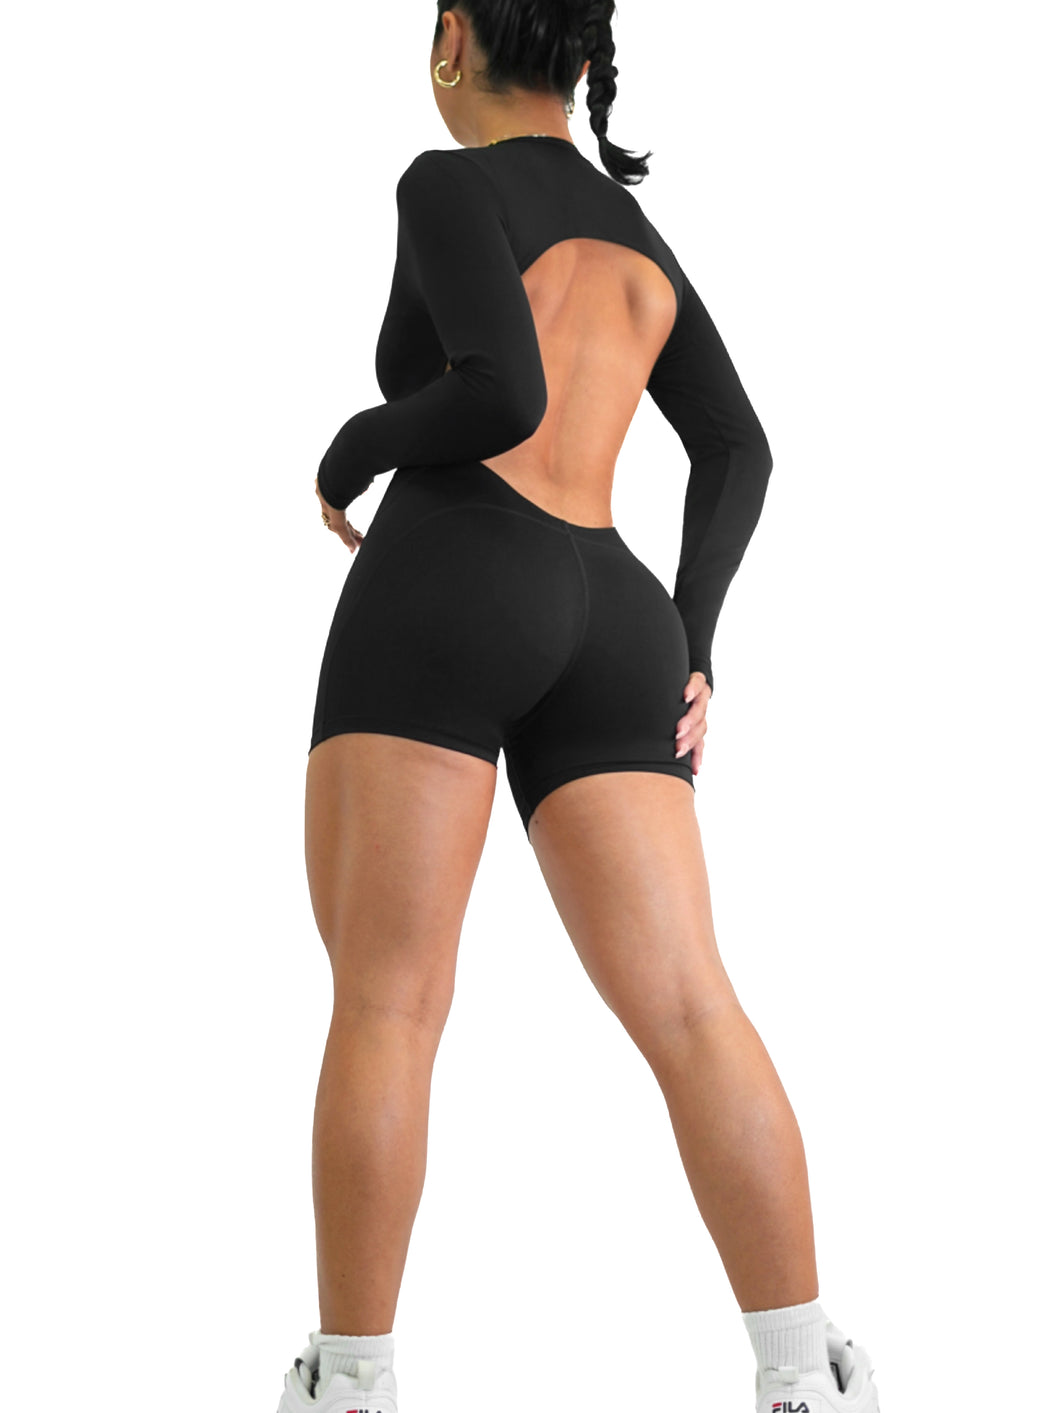 Black Open Back Spandex Bodysuit Shorts Romper New